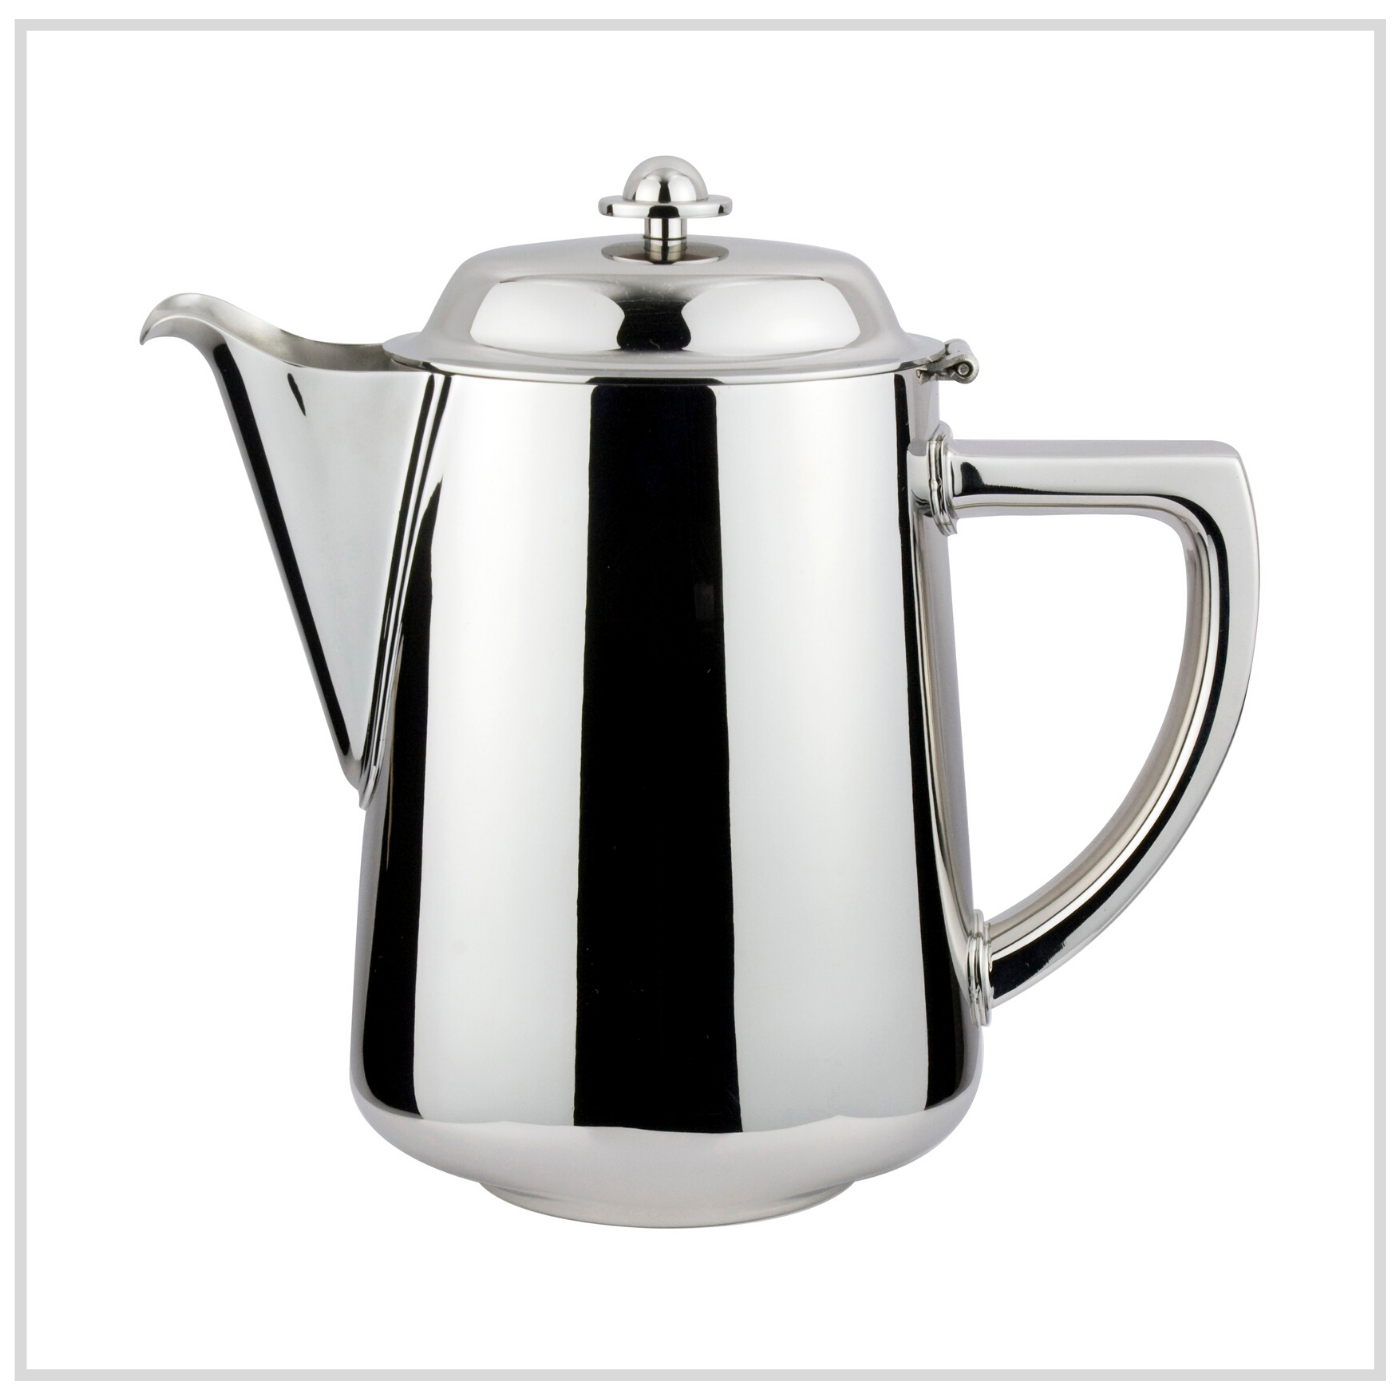 Ilsa Impero Coffee Pot - 4 Cups